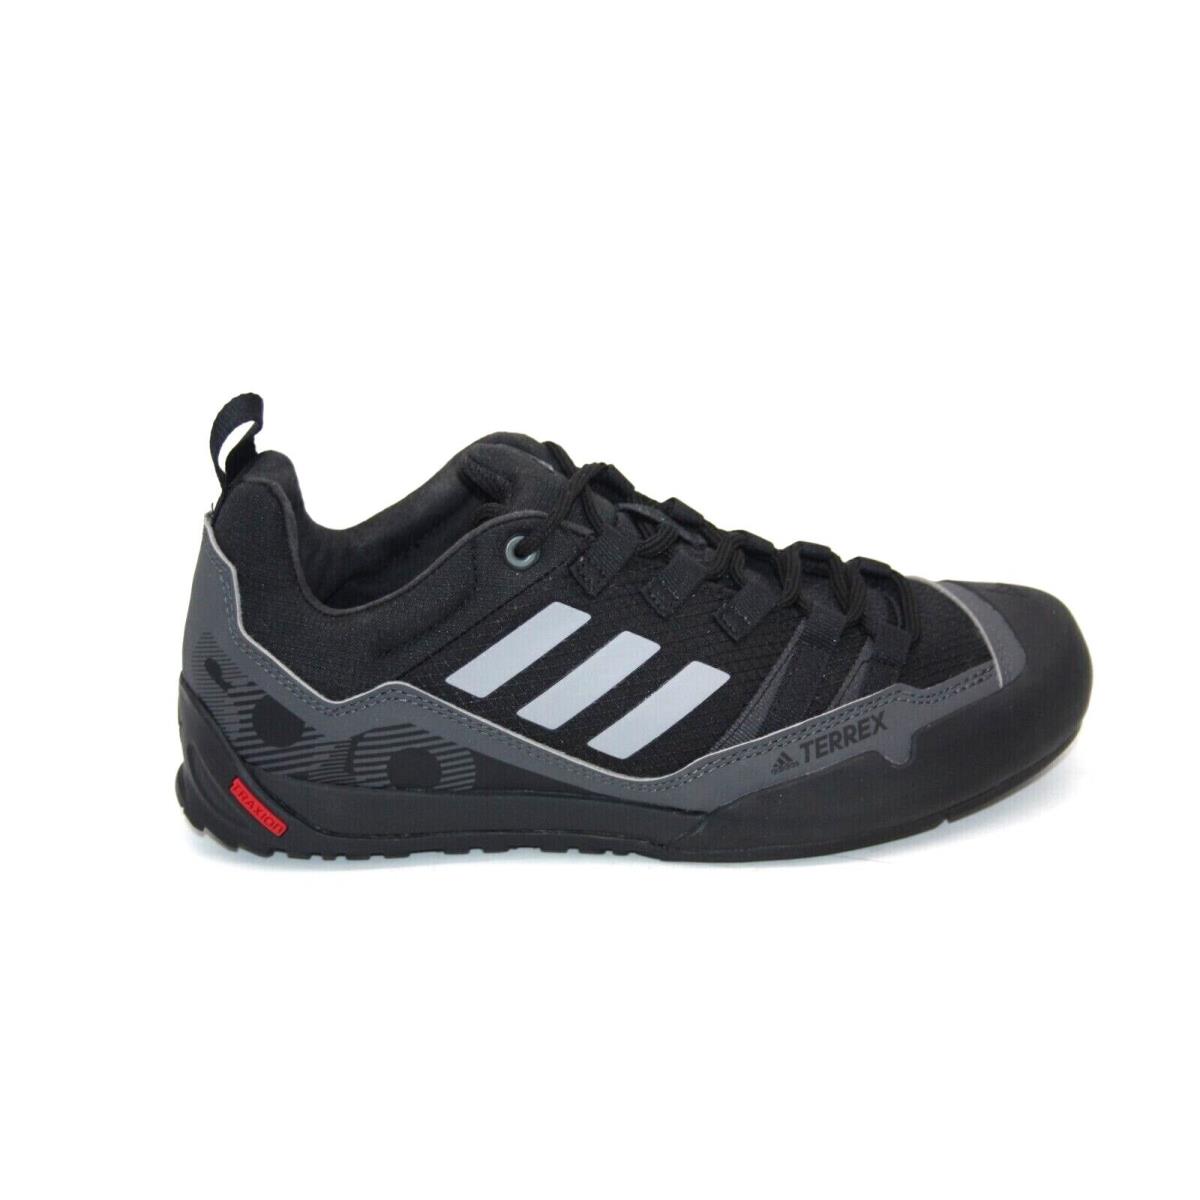 Adidas Terrex Swift Solo 2 Black/black/grey GZ0331 Iunisex Hiking Shoe - BLACK/BLACK/GREY